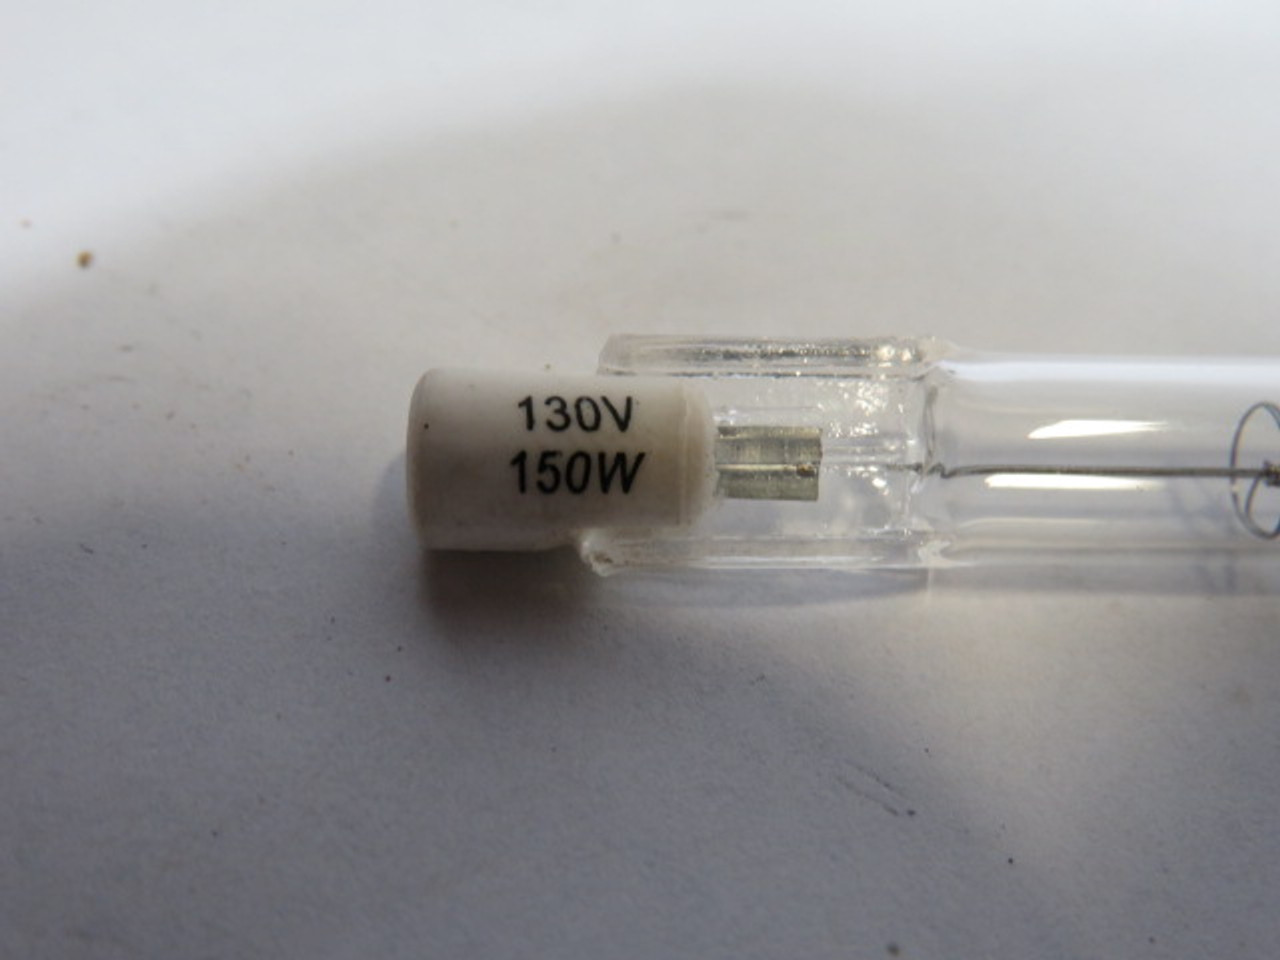 Generic DF-130/150 Linear Halogen Lamp 130V 150W USED